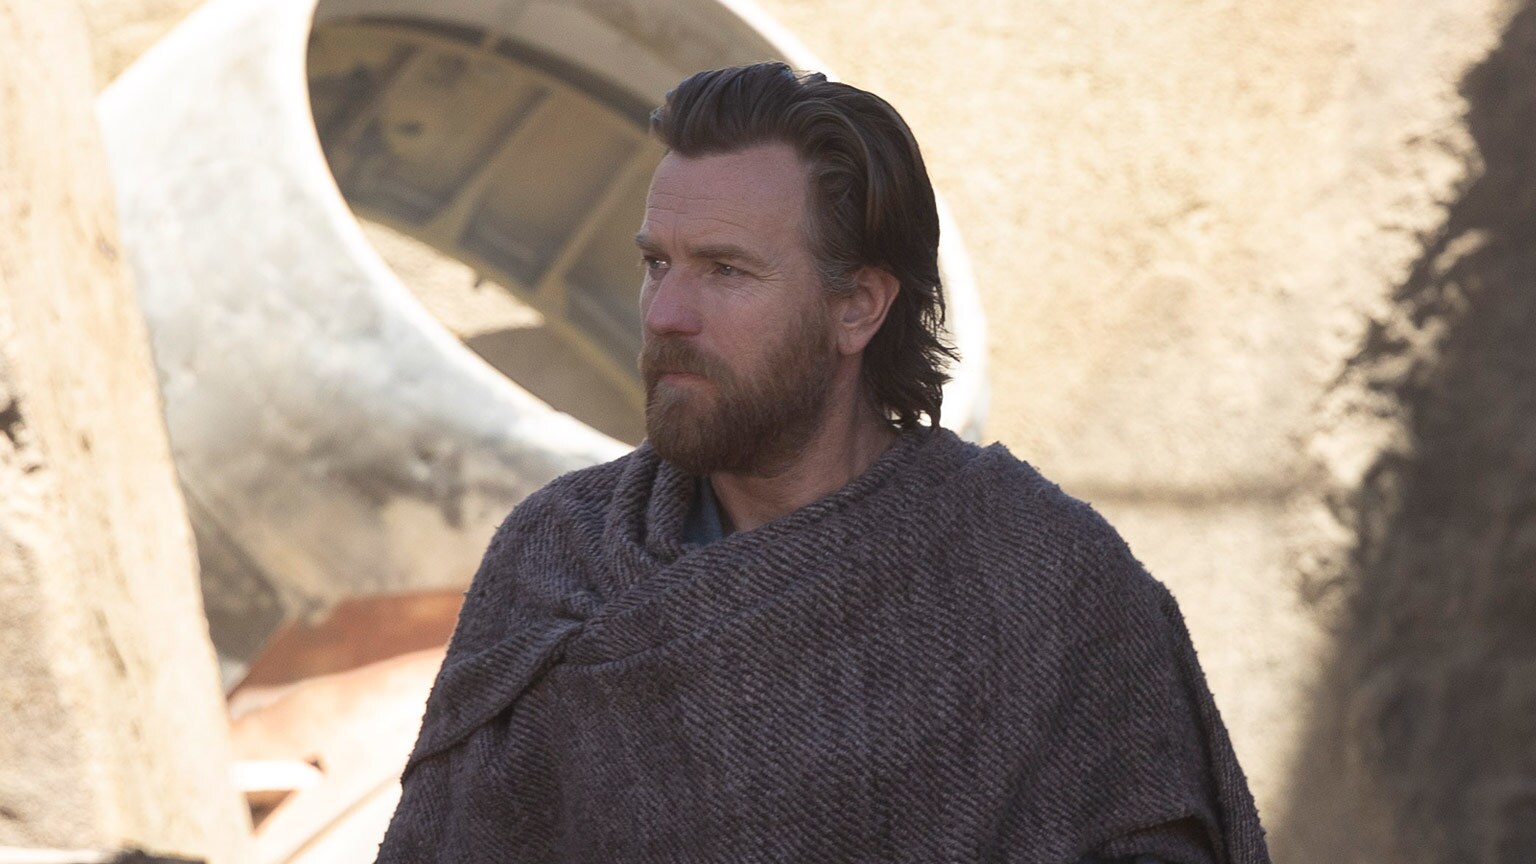 Obi-Wan Kenobi in the Obi-Wan Kenobi series